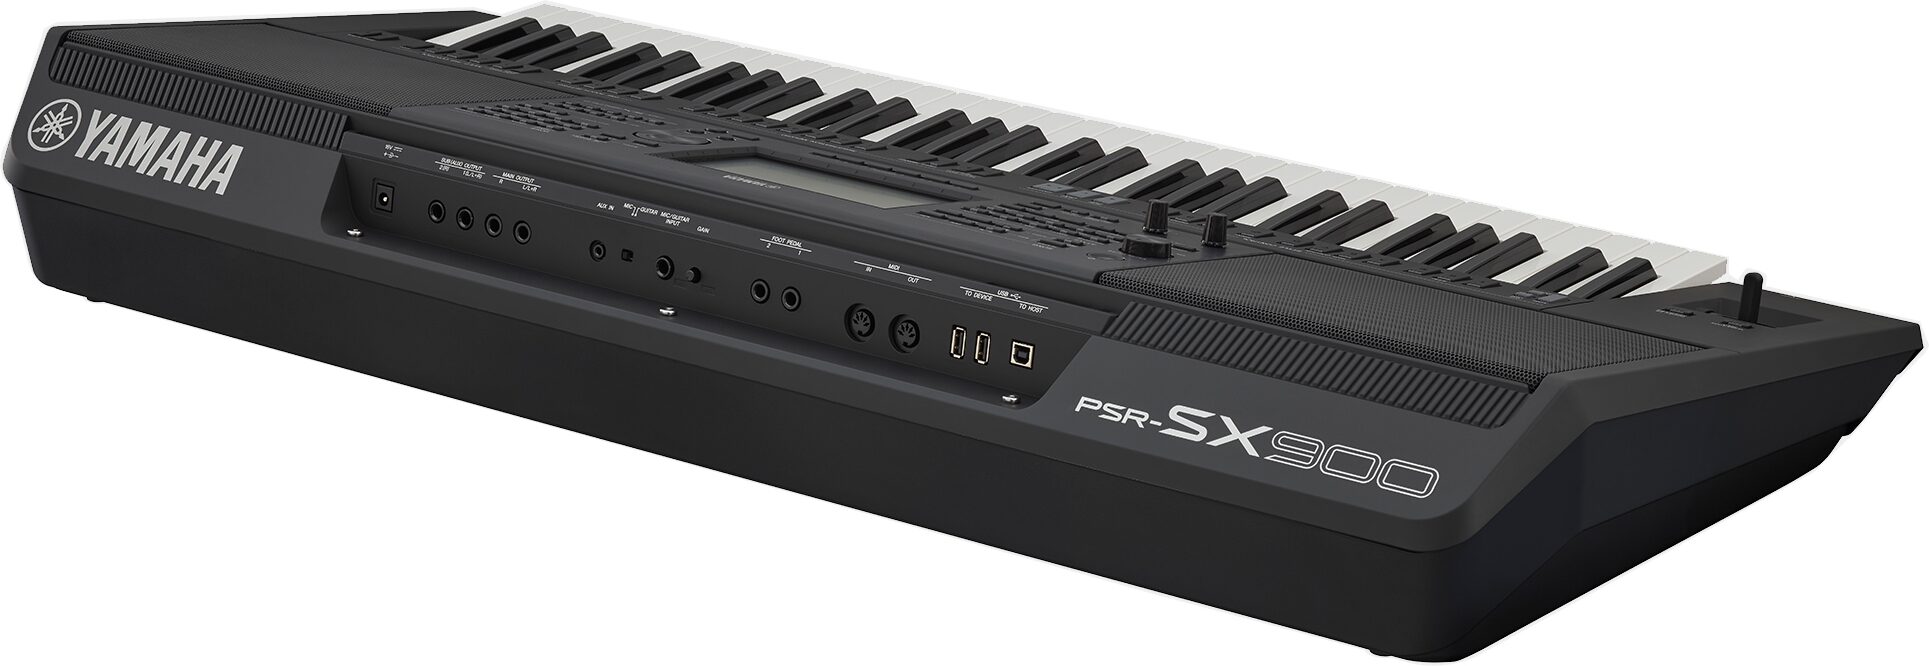 PSR-SX900 Entertainer keyboard Yamaha